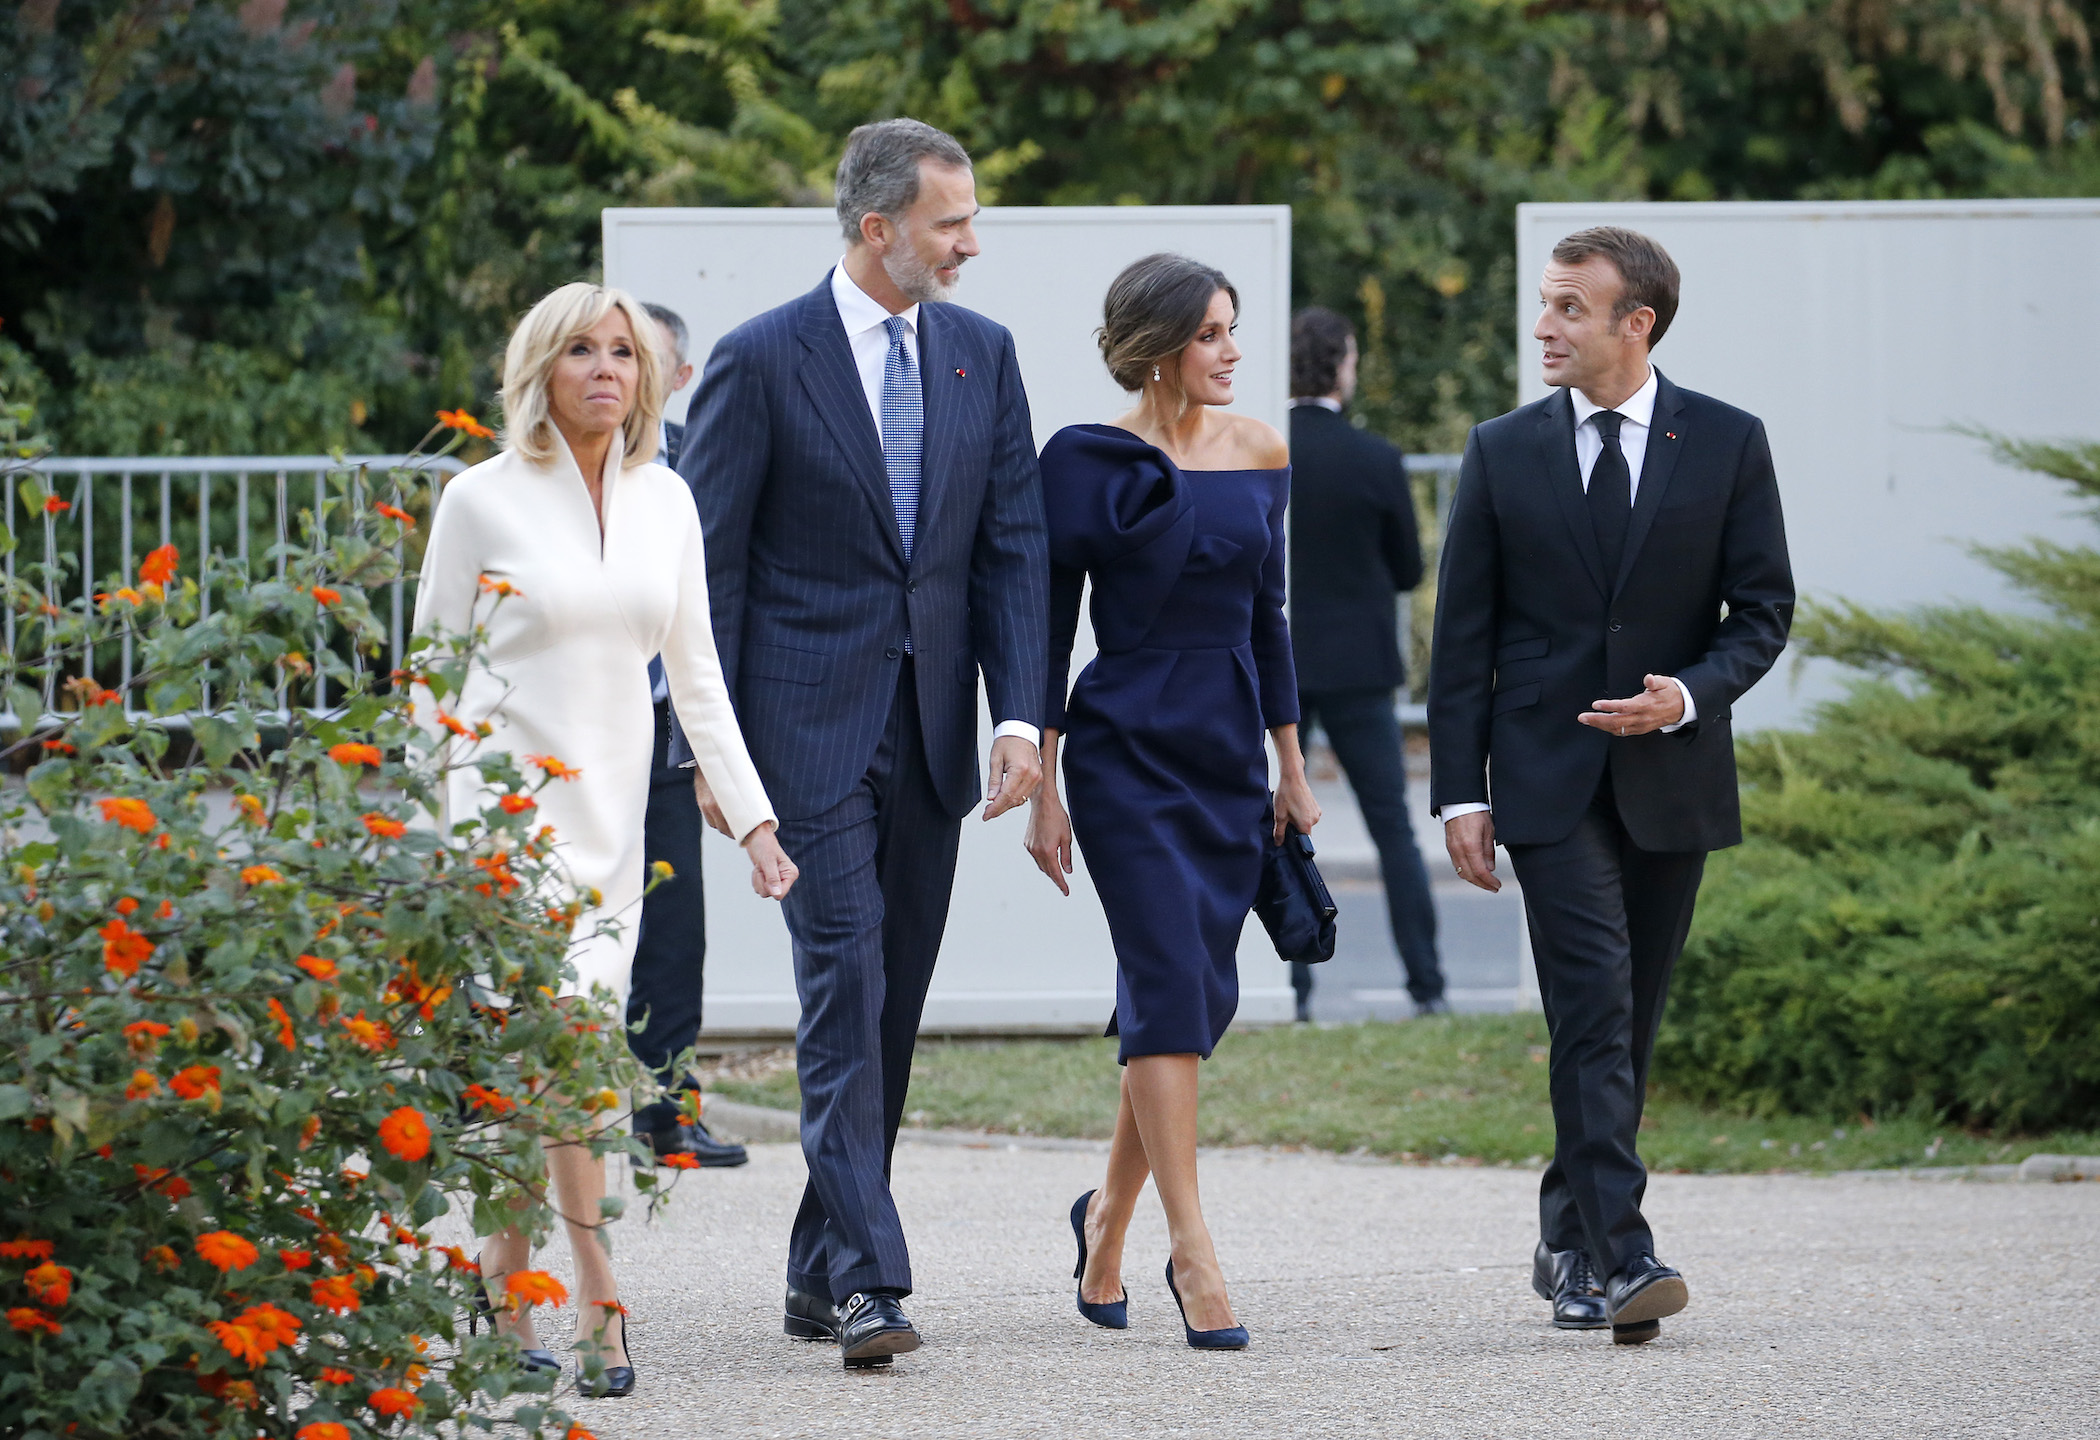 King Felipe Of Spain And Queen Letizia Of Spain Attend The "miro, La Couleur Des Reves" Exhibition At Grand Palais In Paris